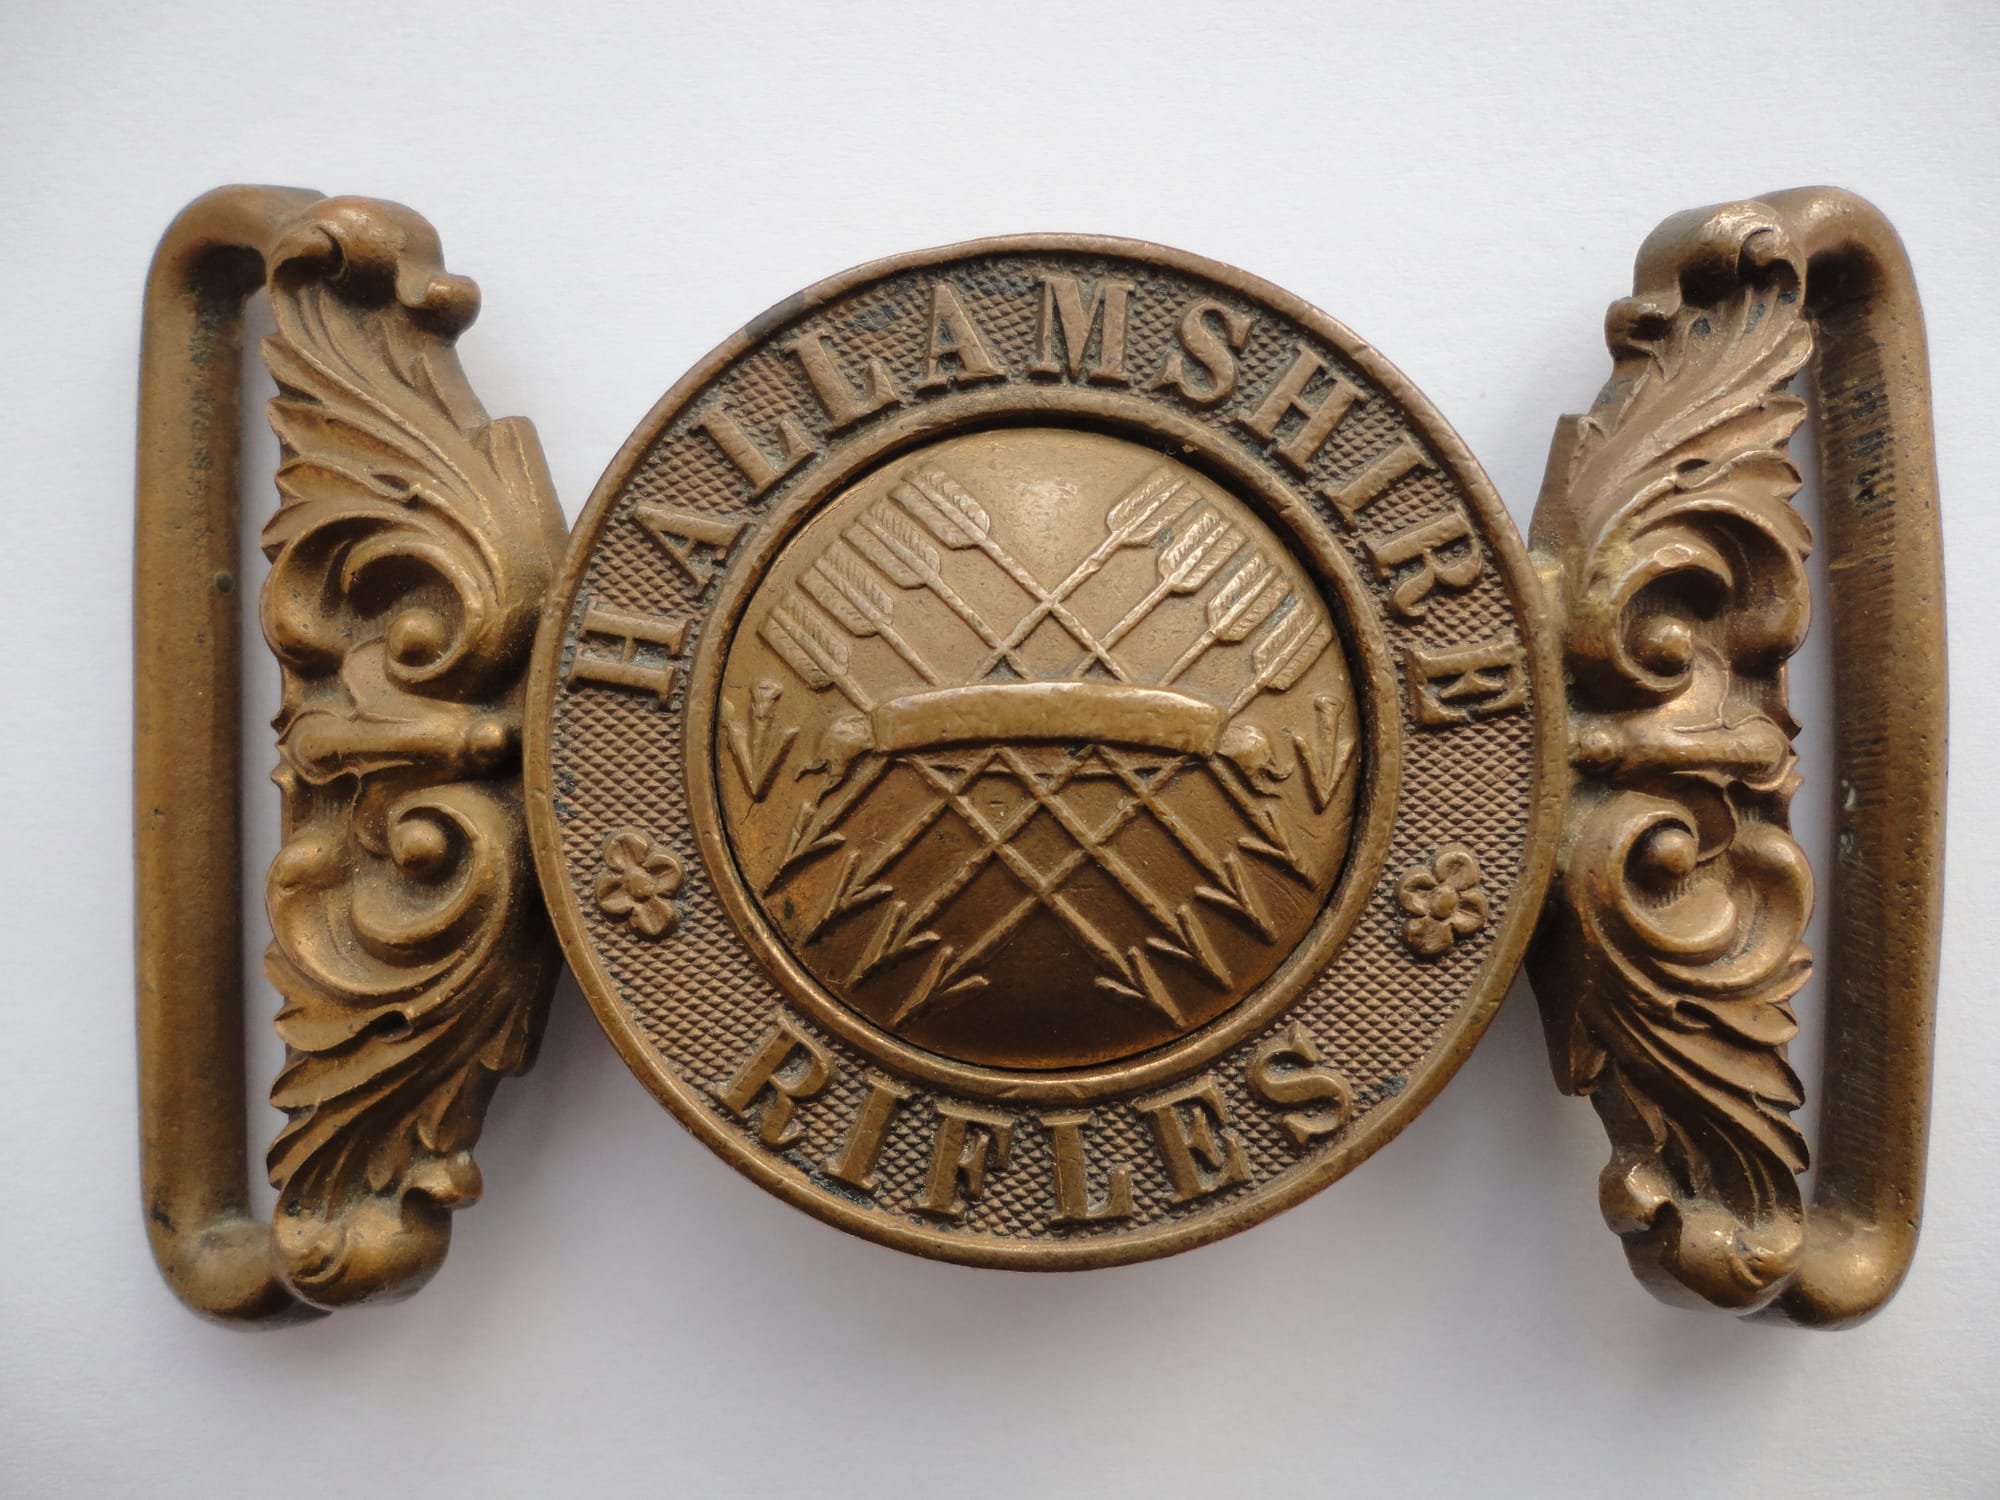 Other Ranks Waist Belt Clasp Hallamshire Rifle Volunteer Corps 1859 to 1883